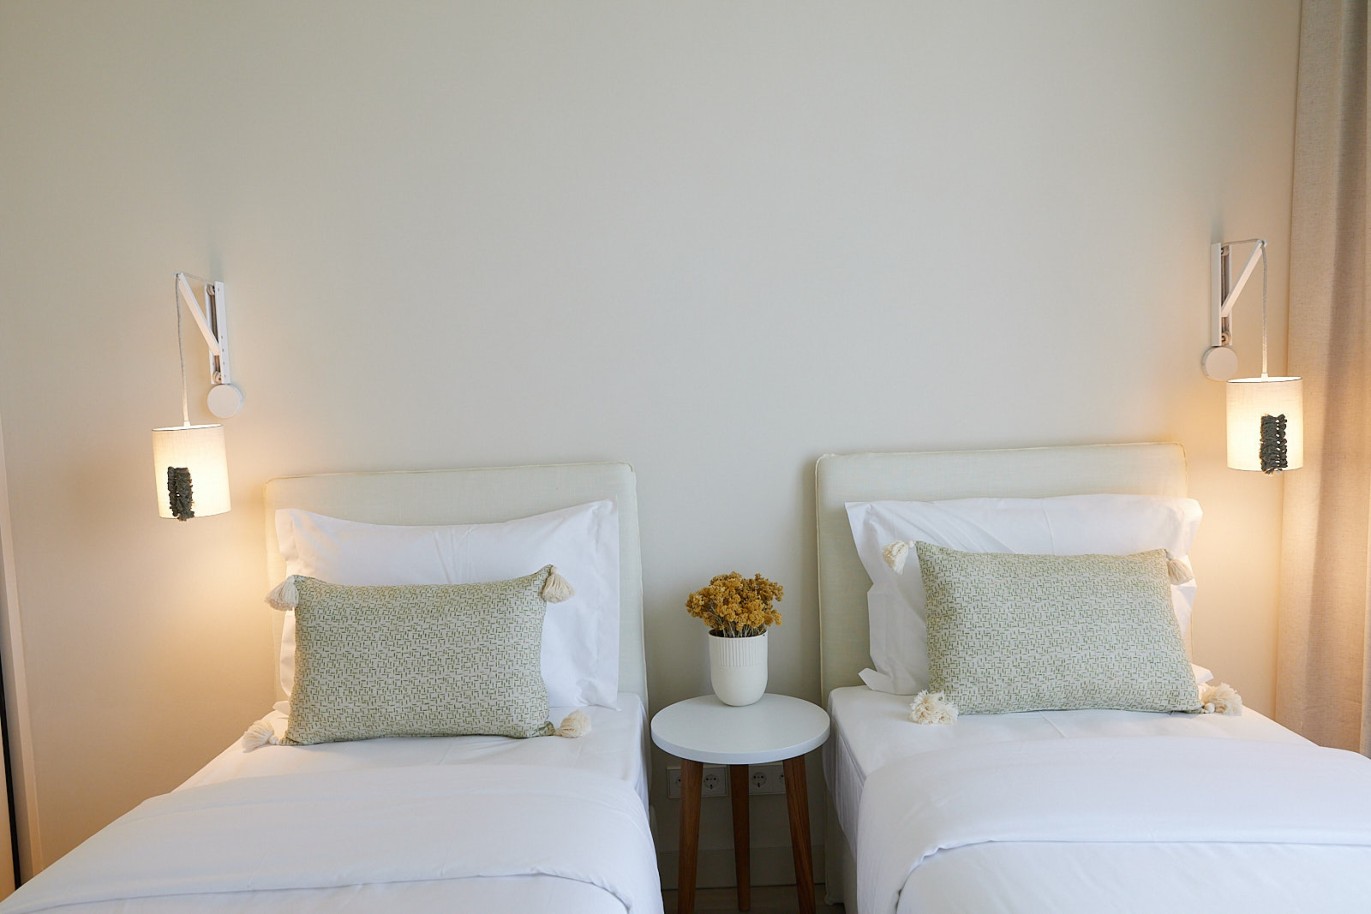 2 bedroom apartment in resort, for sale in Porches, Algarve_228956